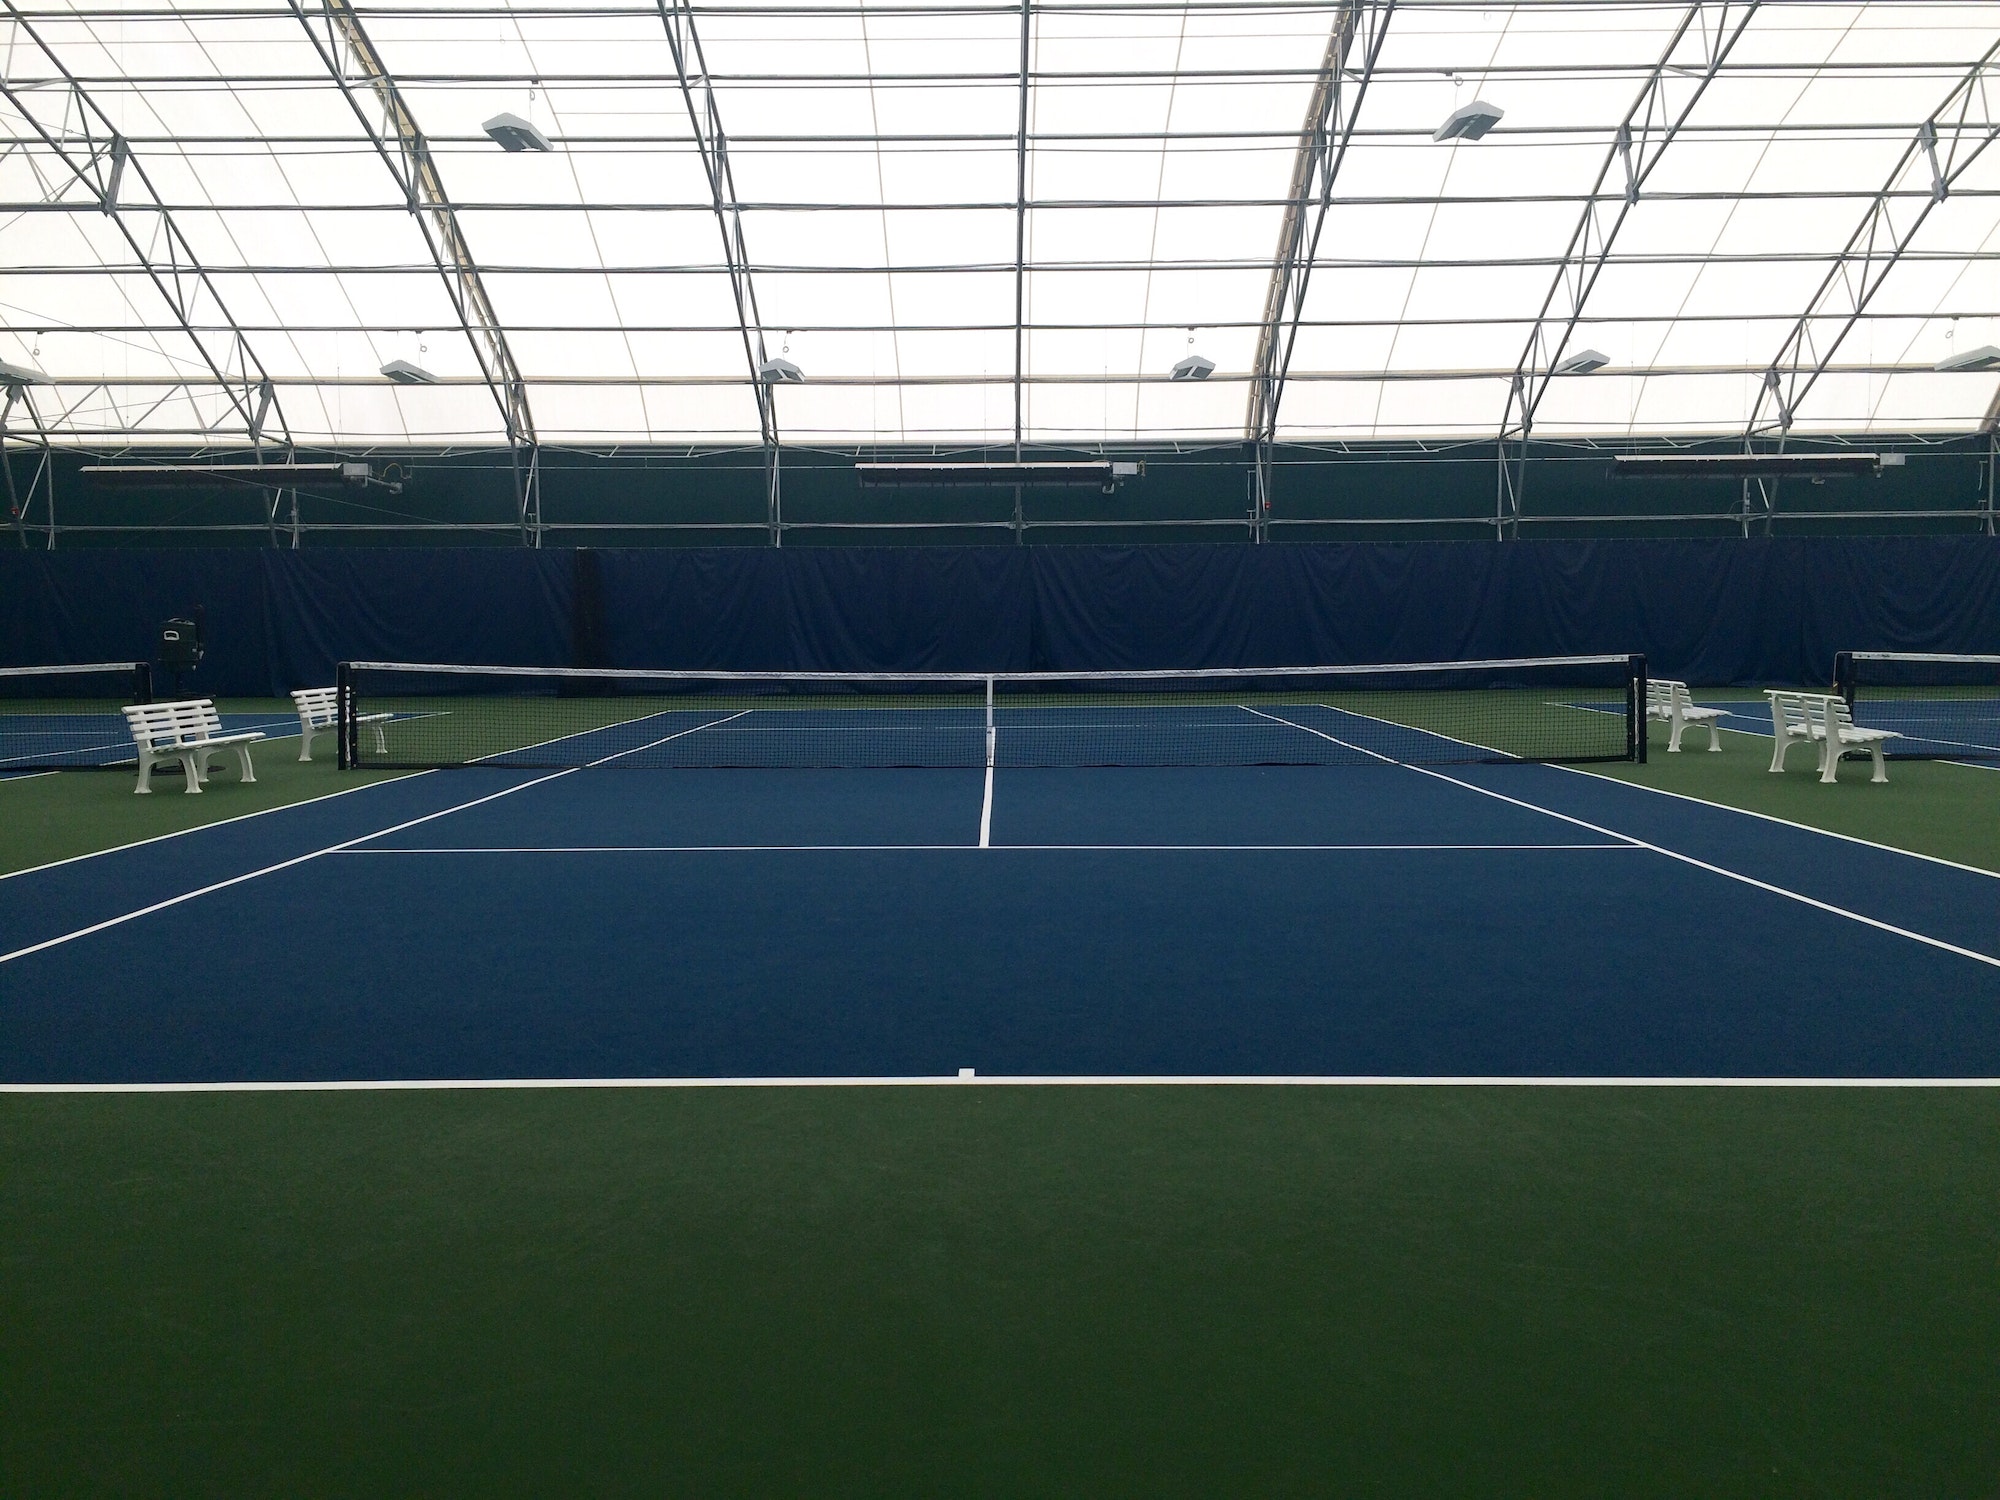 Indoor tennis court at a sports complex.